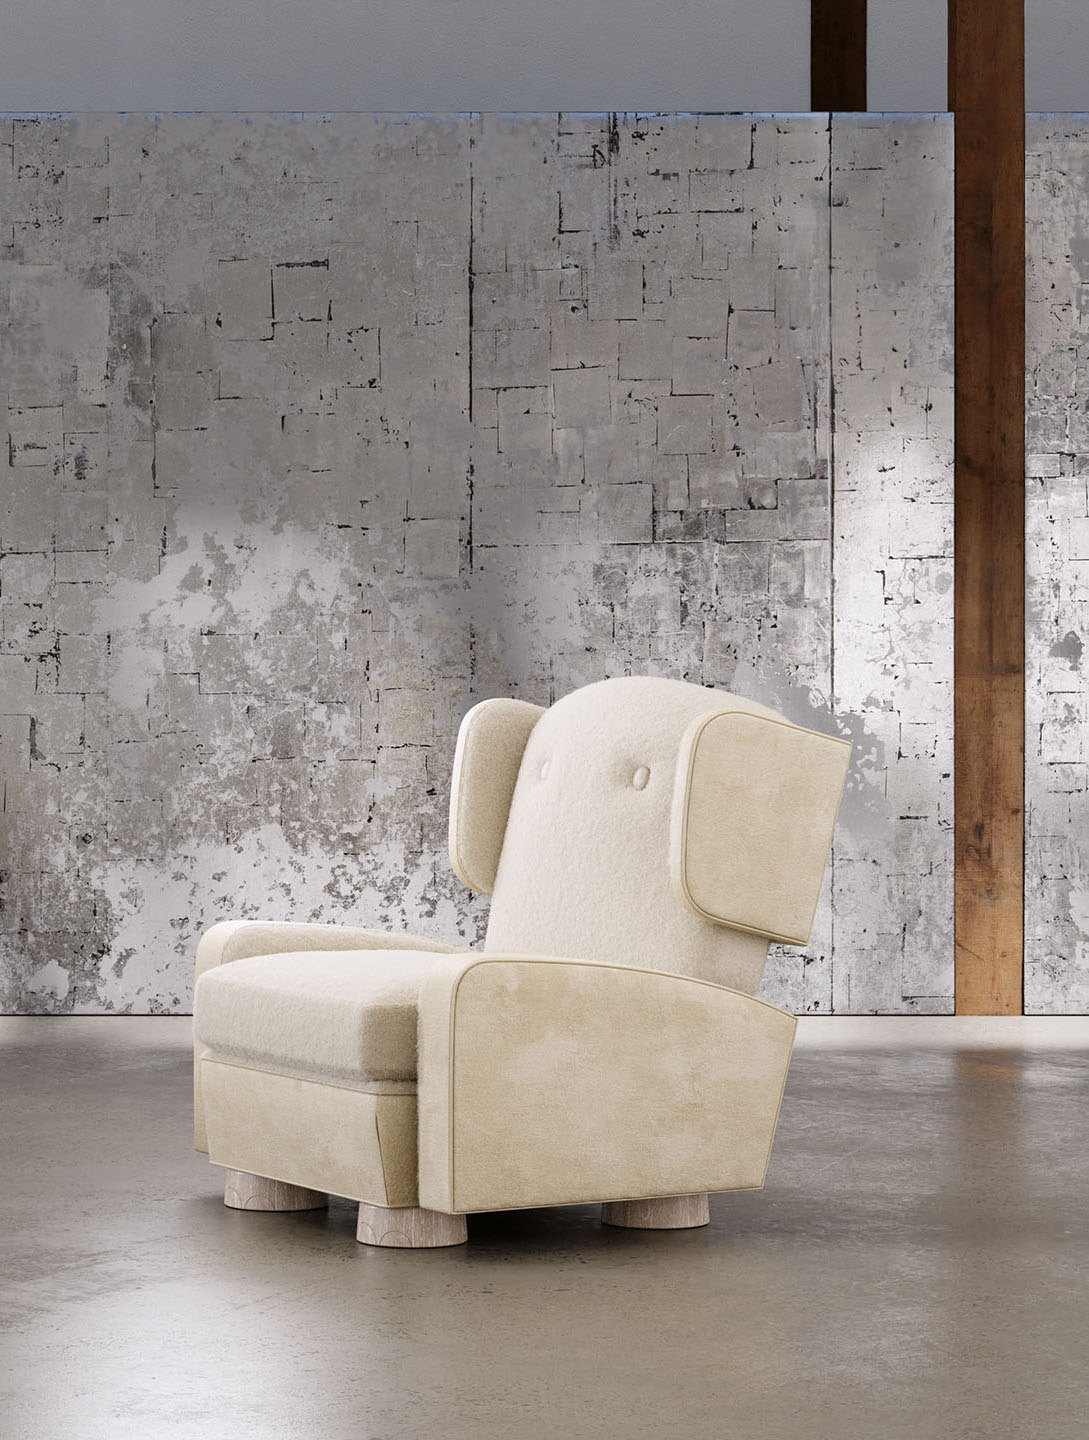 New-York-Design-Center-WNWN-De-La-Vega-L'Elephante-Chairs